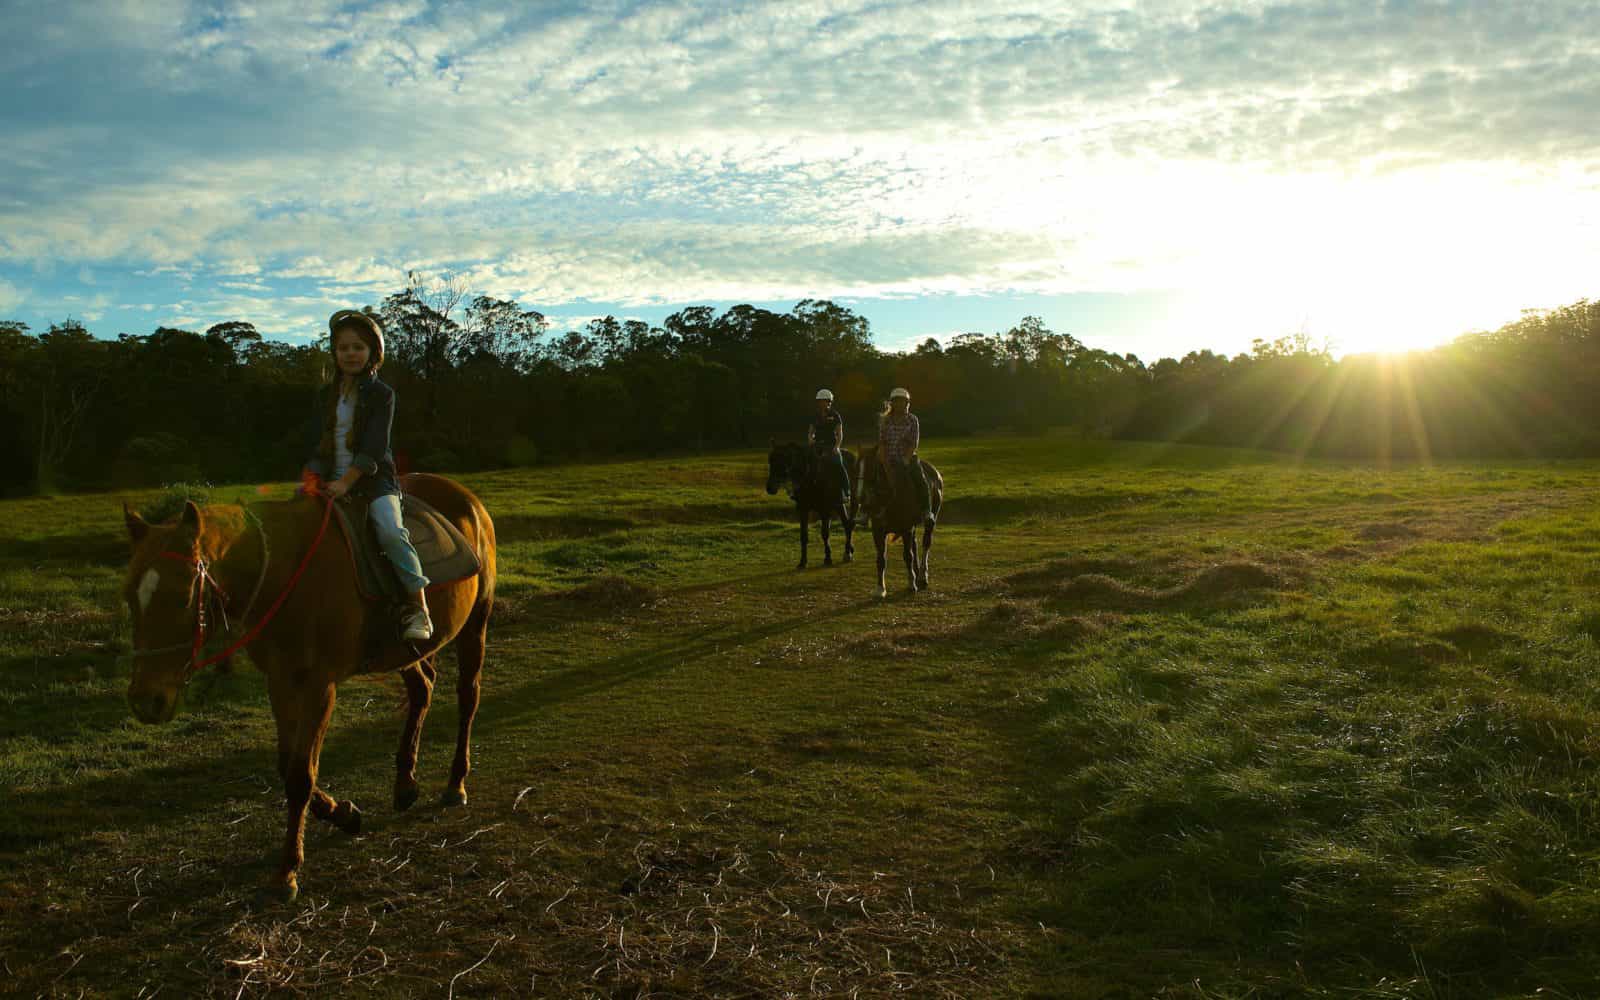 Horseriding at Sundown